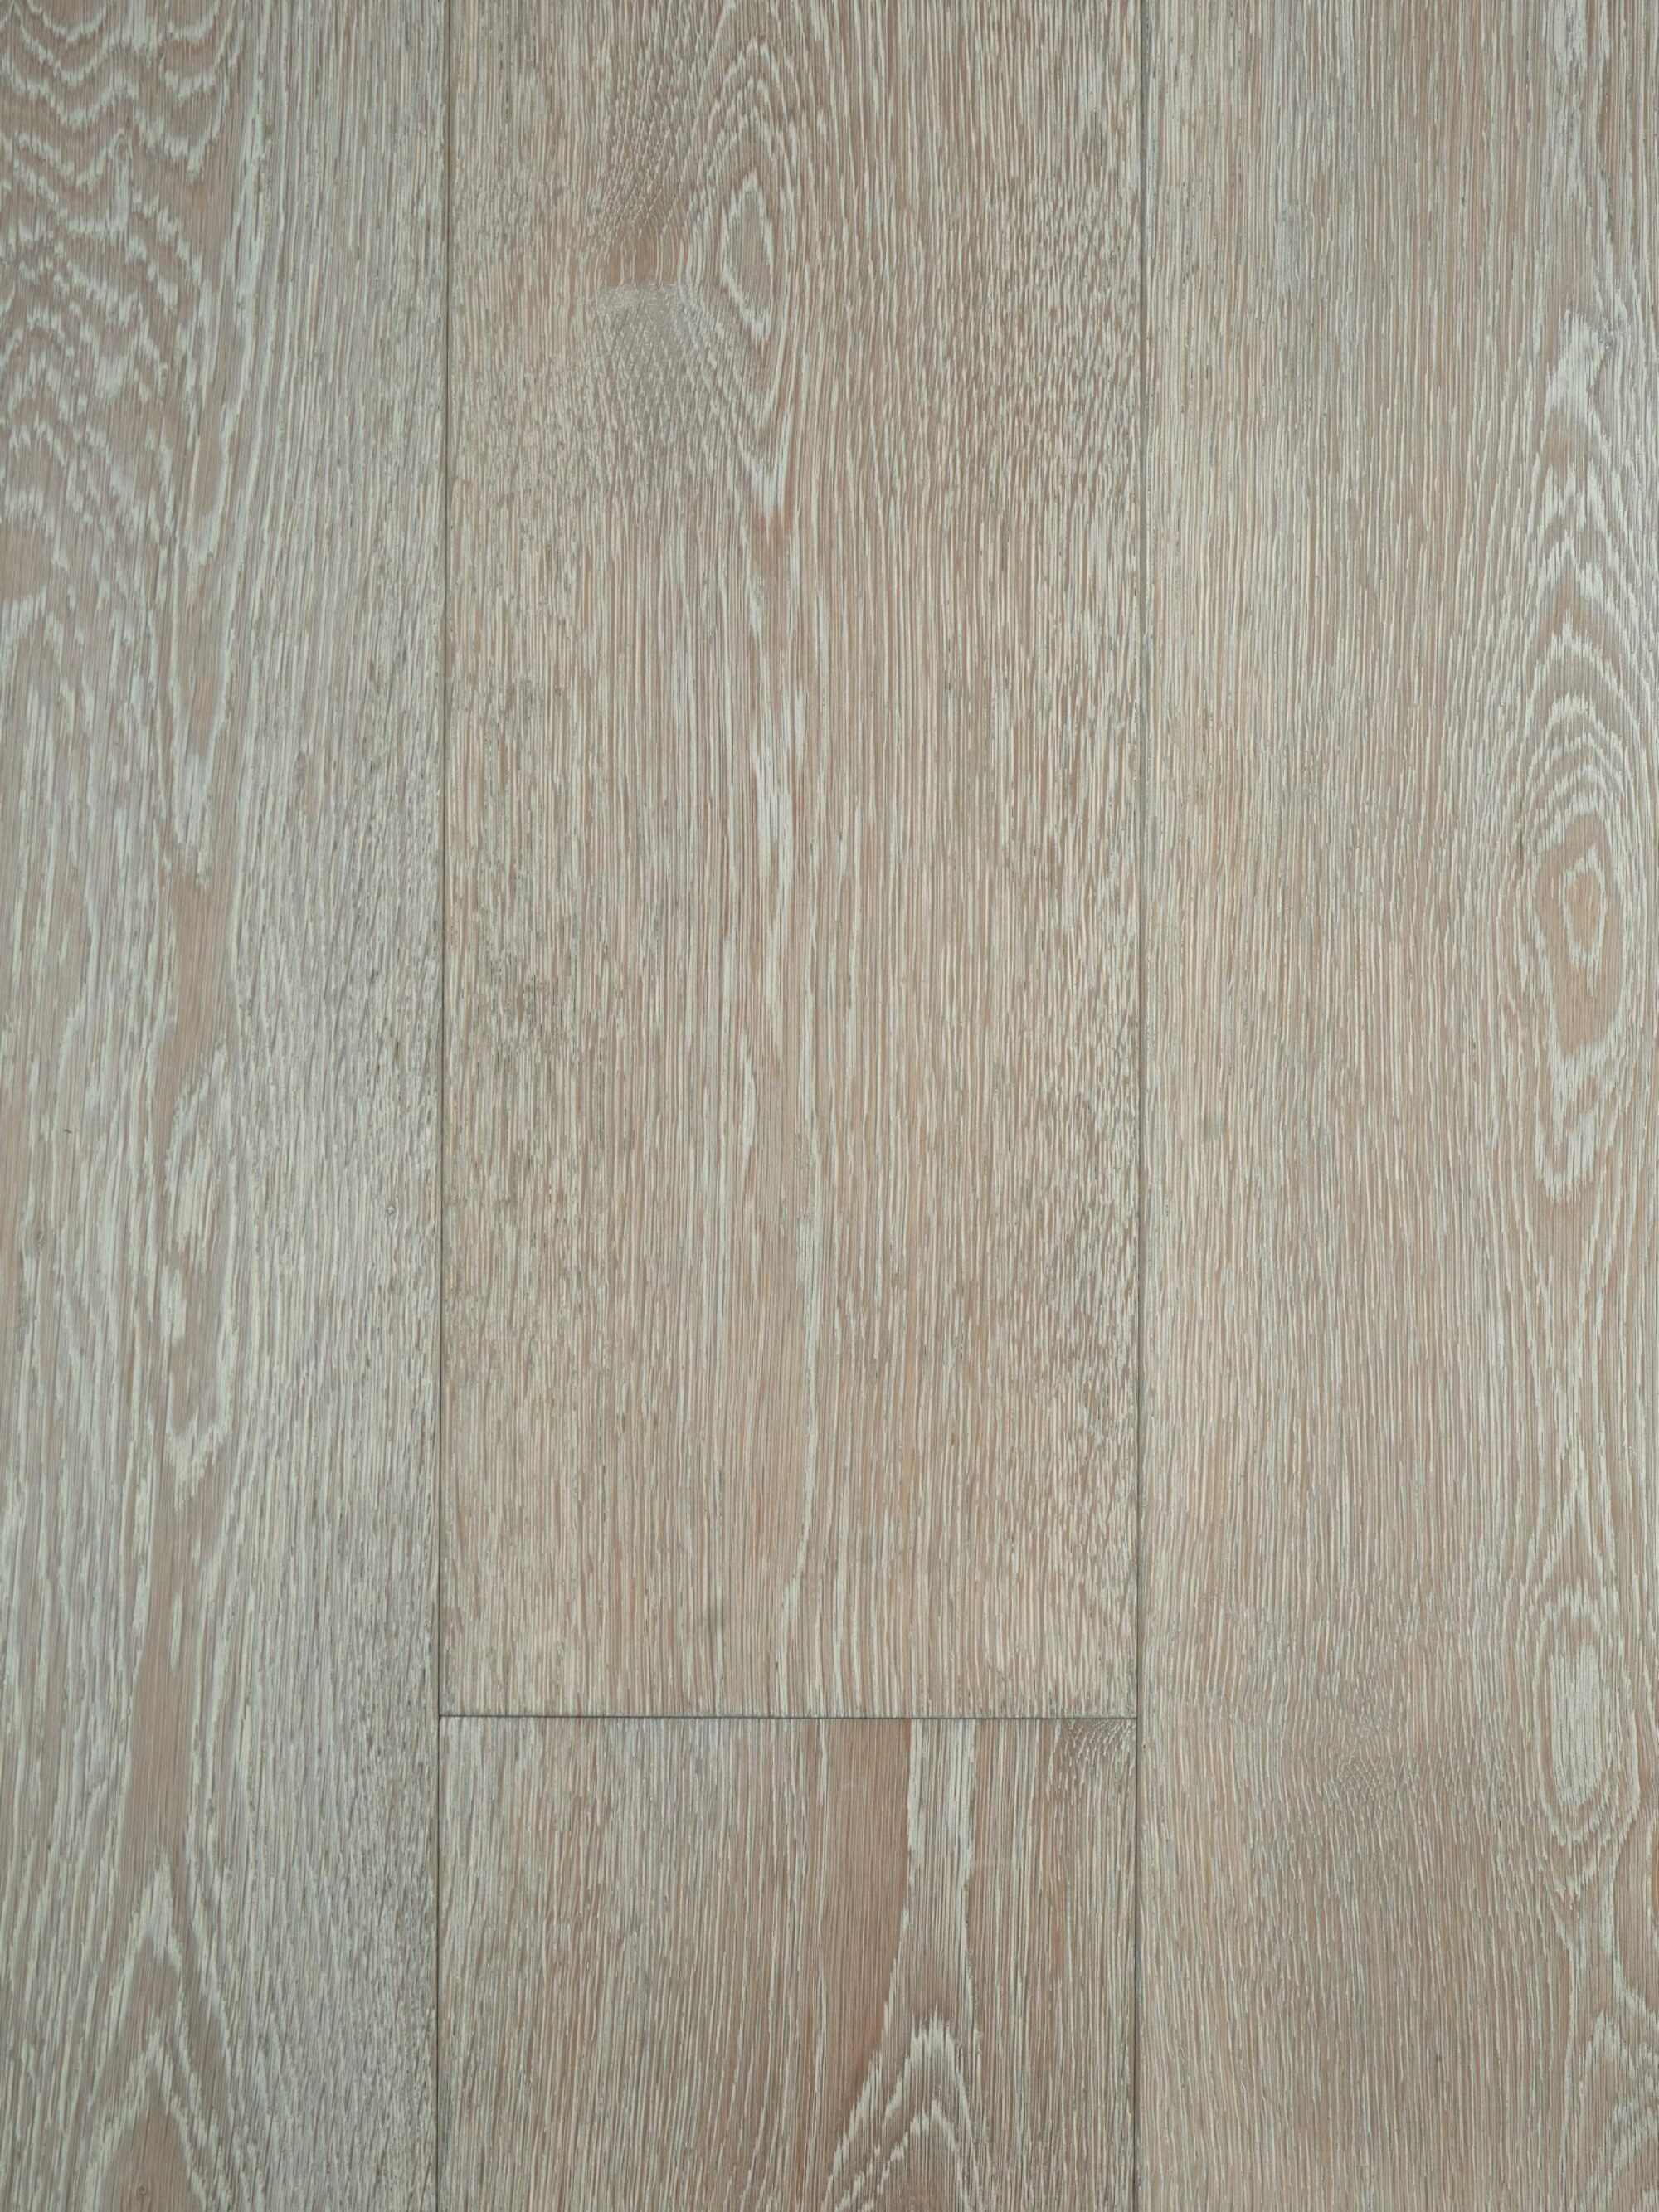 Grey oak flooring Landmark Tyntesfield